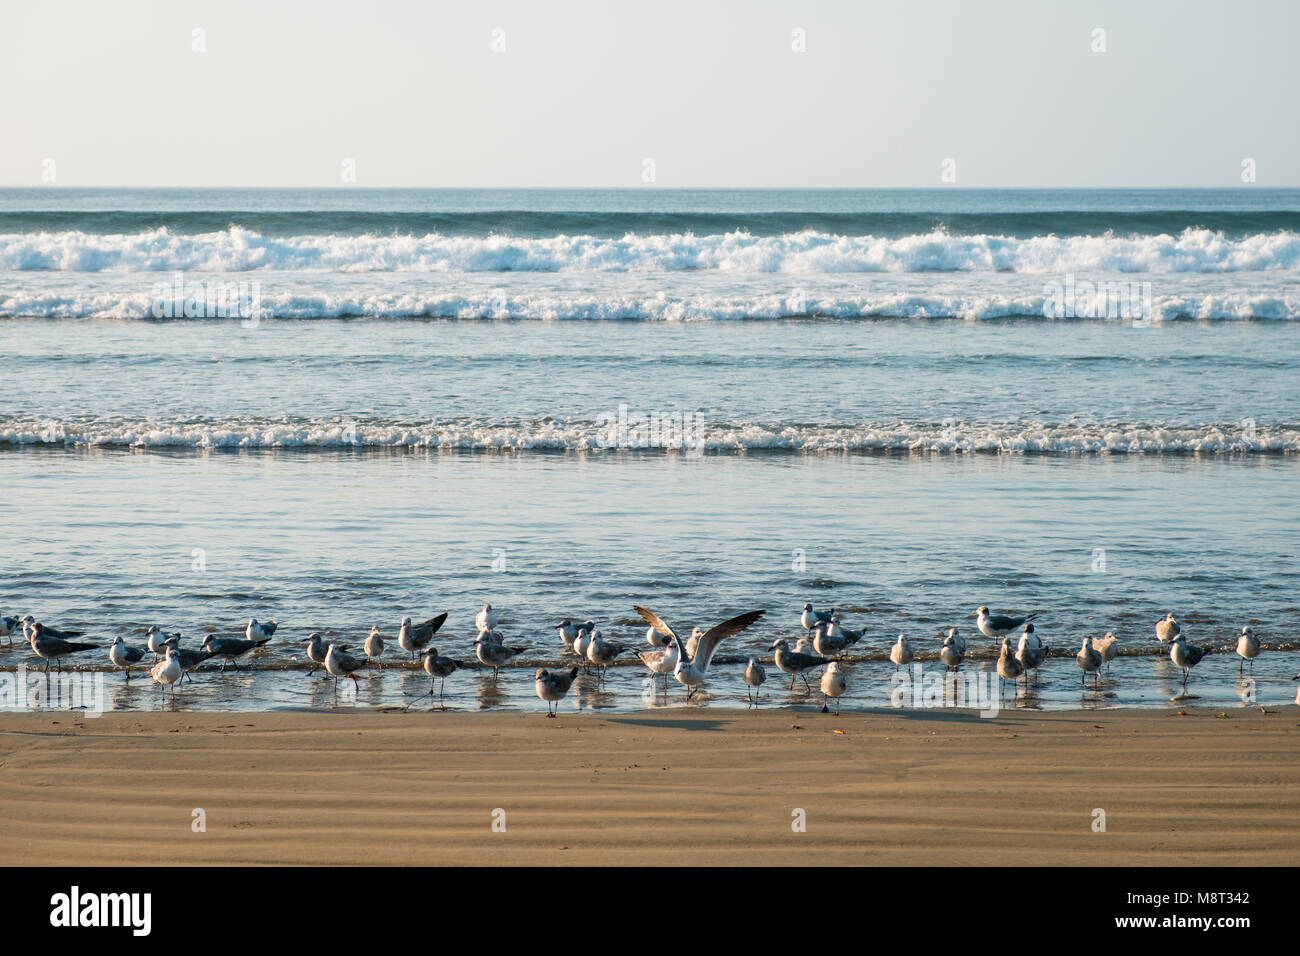 Groupe d'oiseaux mouettes / sea gull on beach Banque D'Images